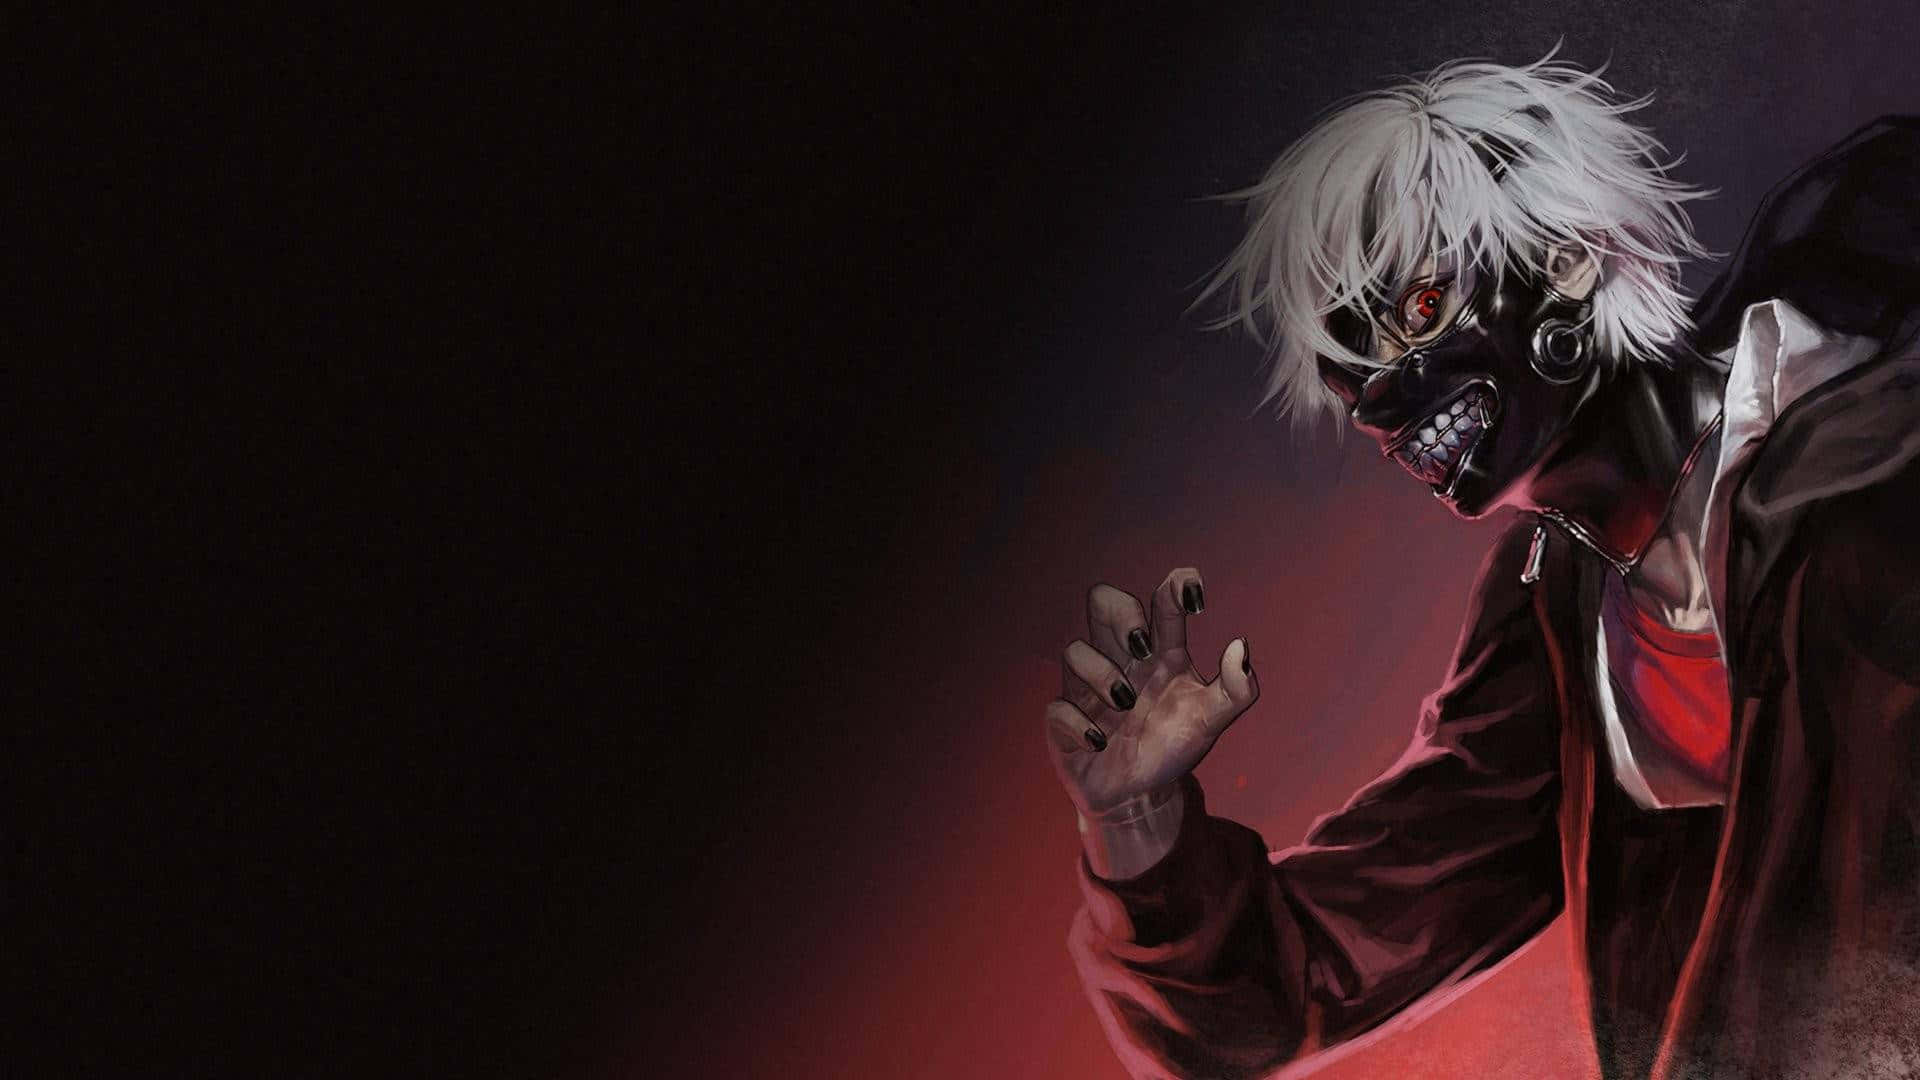 Scary Anime Kaneki With Threatening Expression Wallpaper